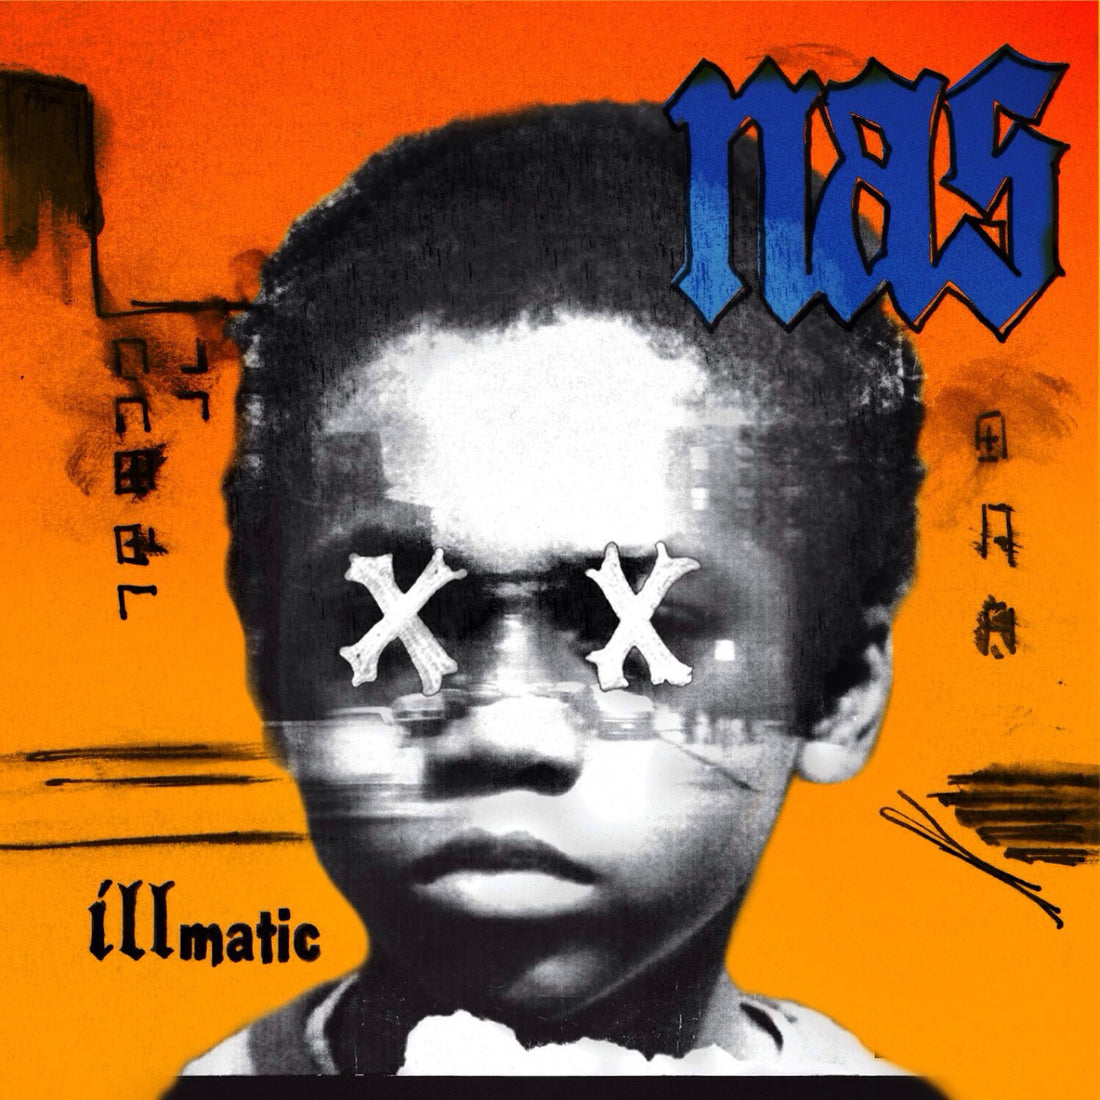 Nas "Illmatic XX" LP Vinyl